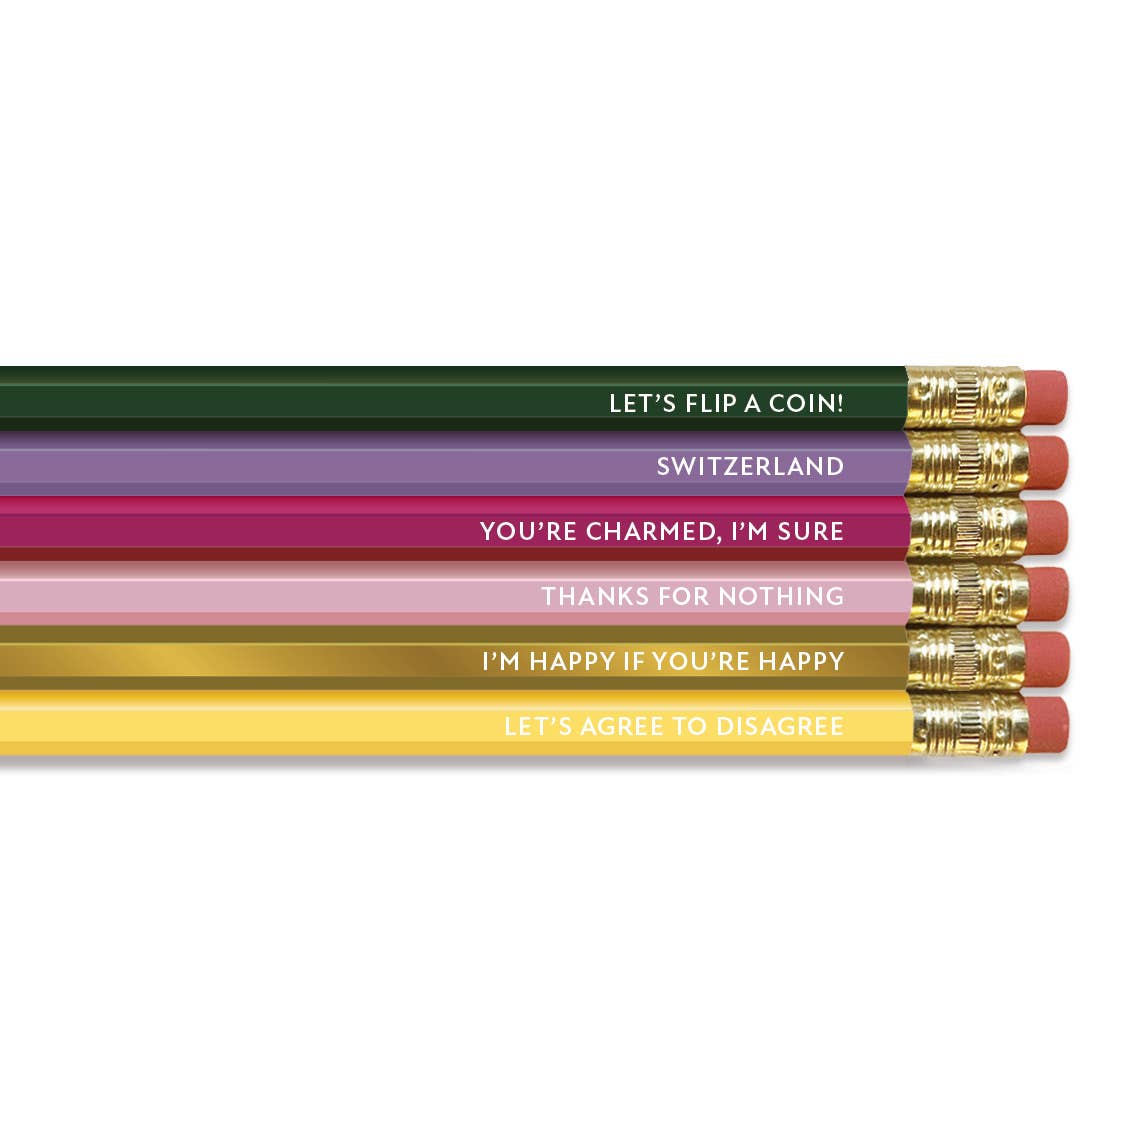 Sapling Press Pencil Sets